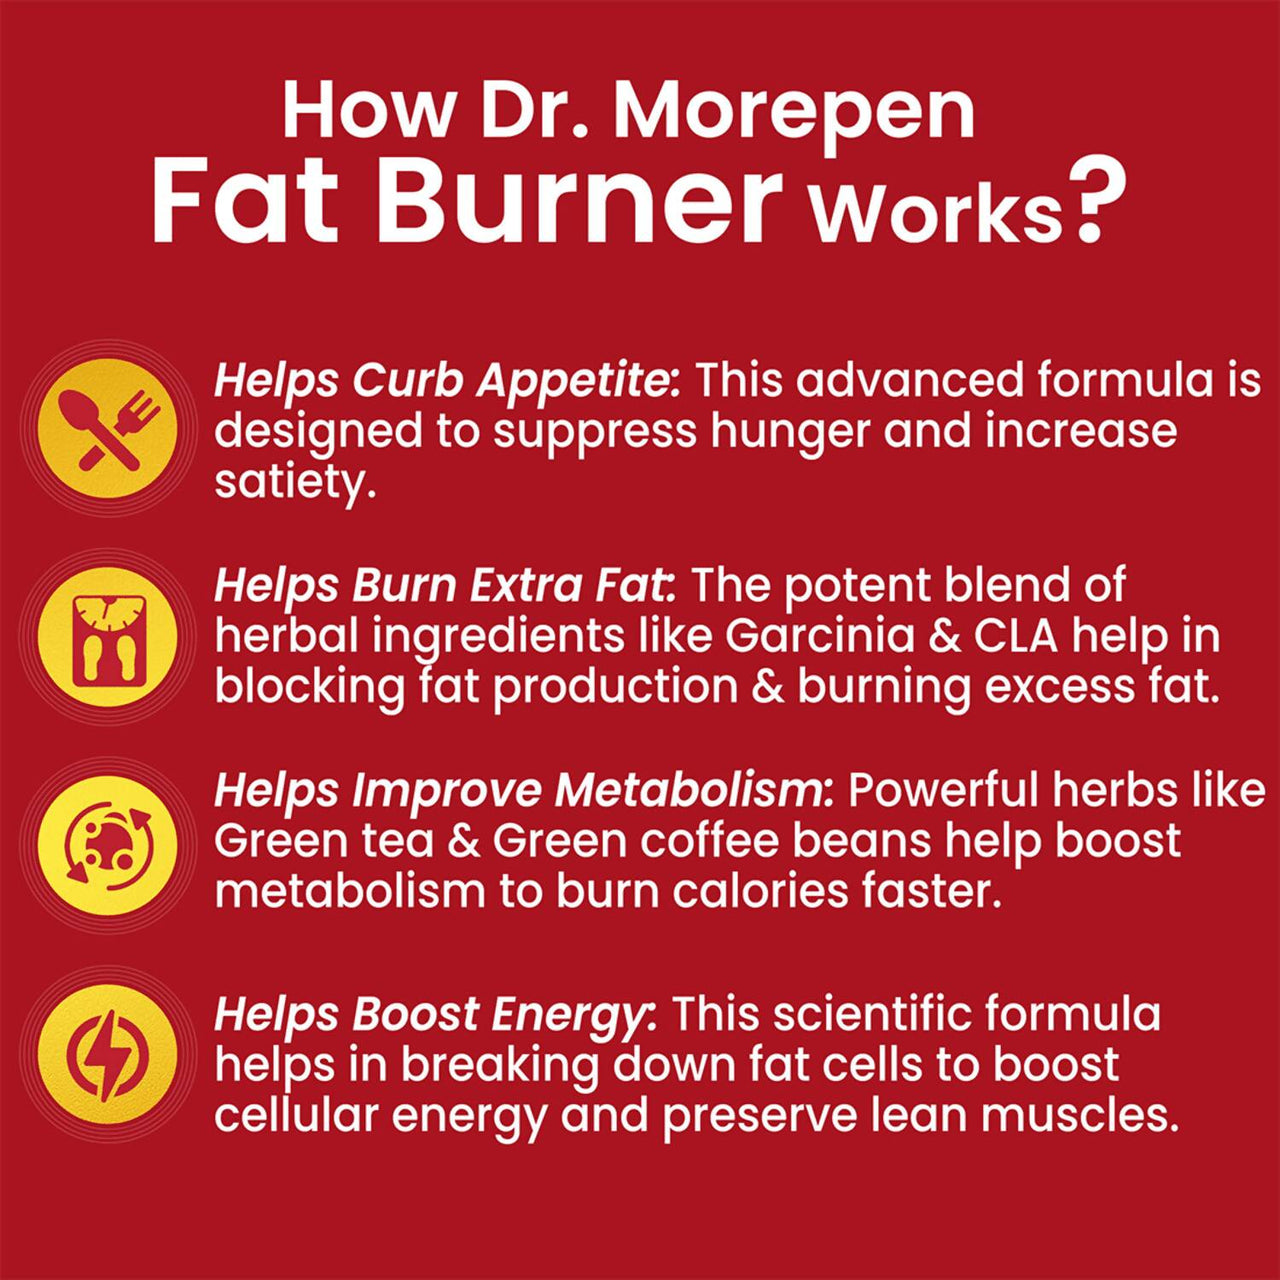 Dr. Morepen Biotin+ Advanced Tablets and Fat Burner Tablets Combo - Distacart